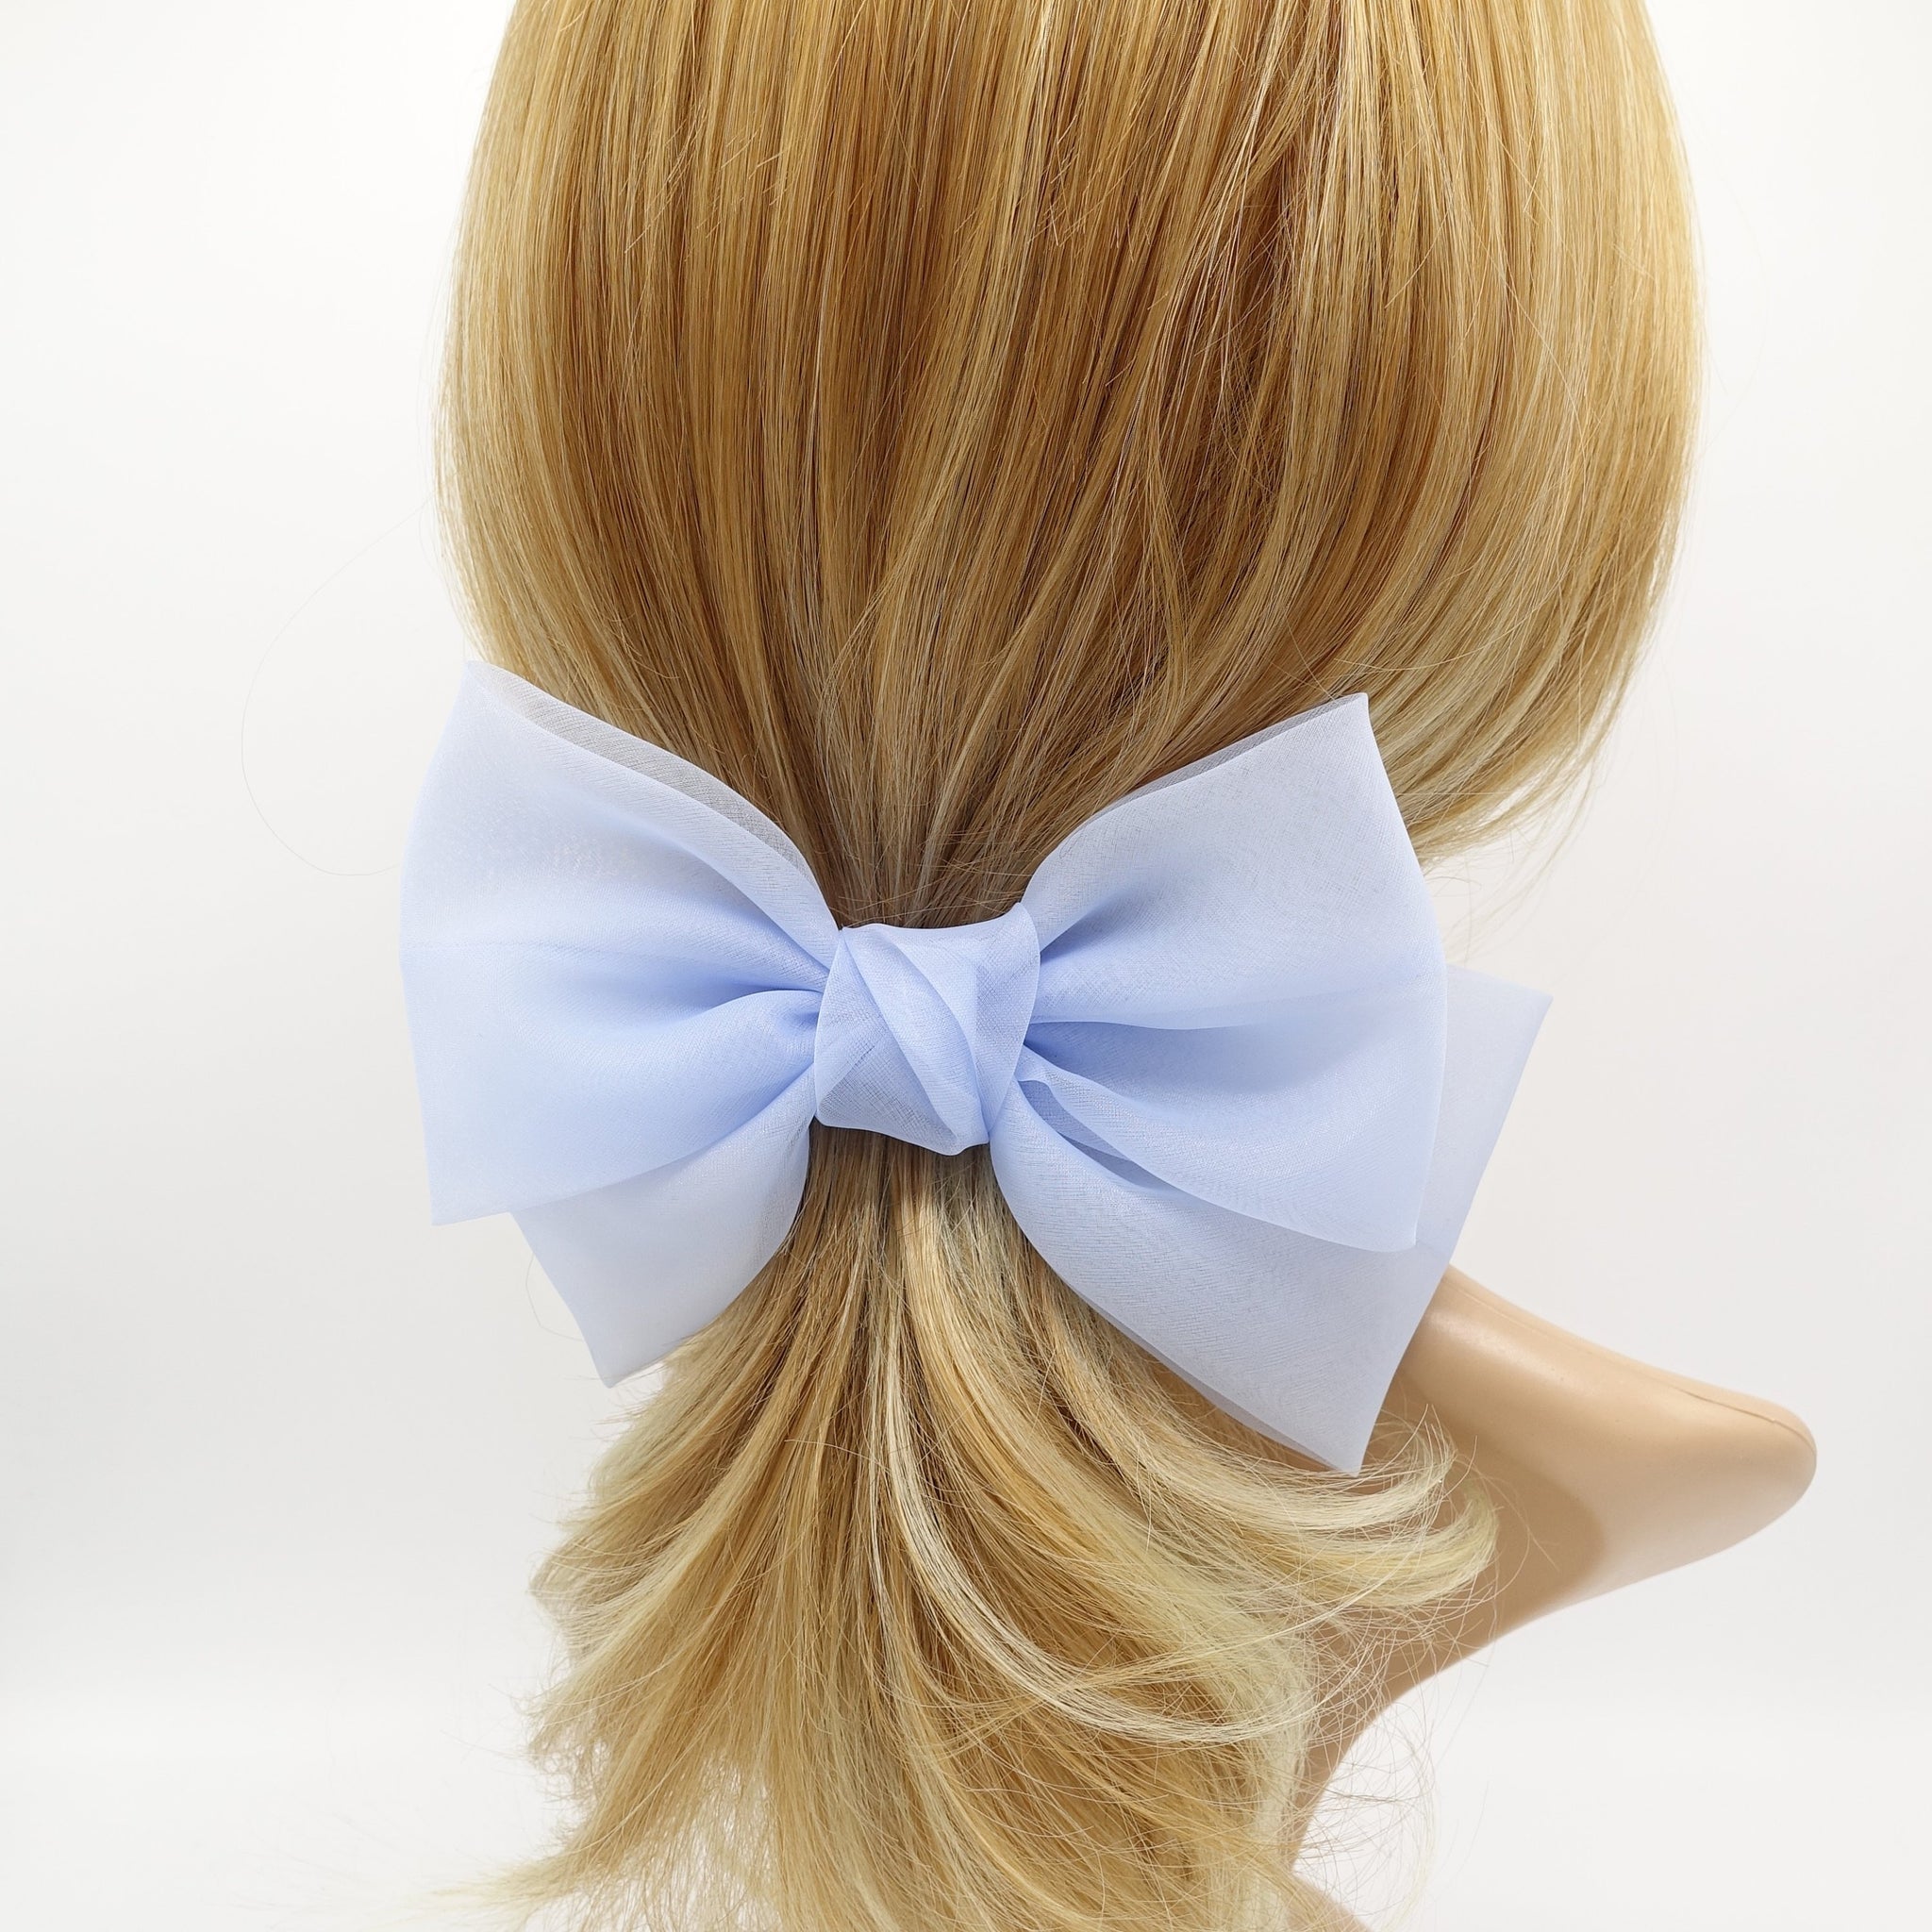 VeryShine claw/banana/barrette Sky blue organza hair bow normal size hair accessory for women